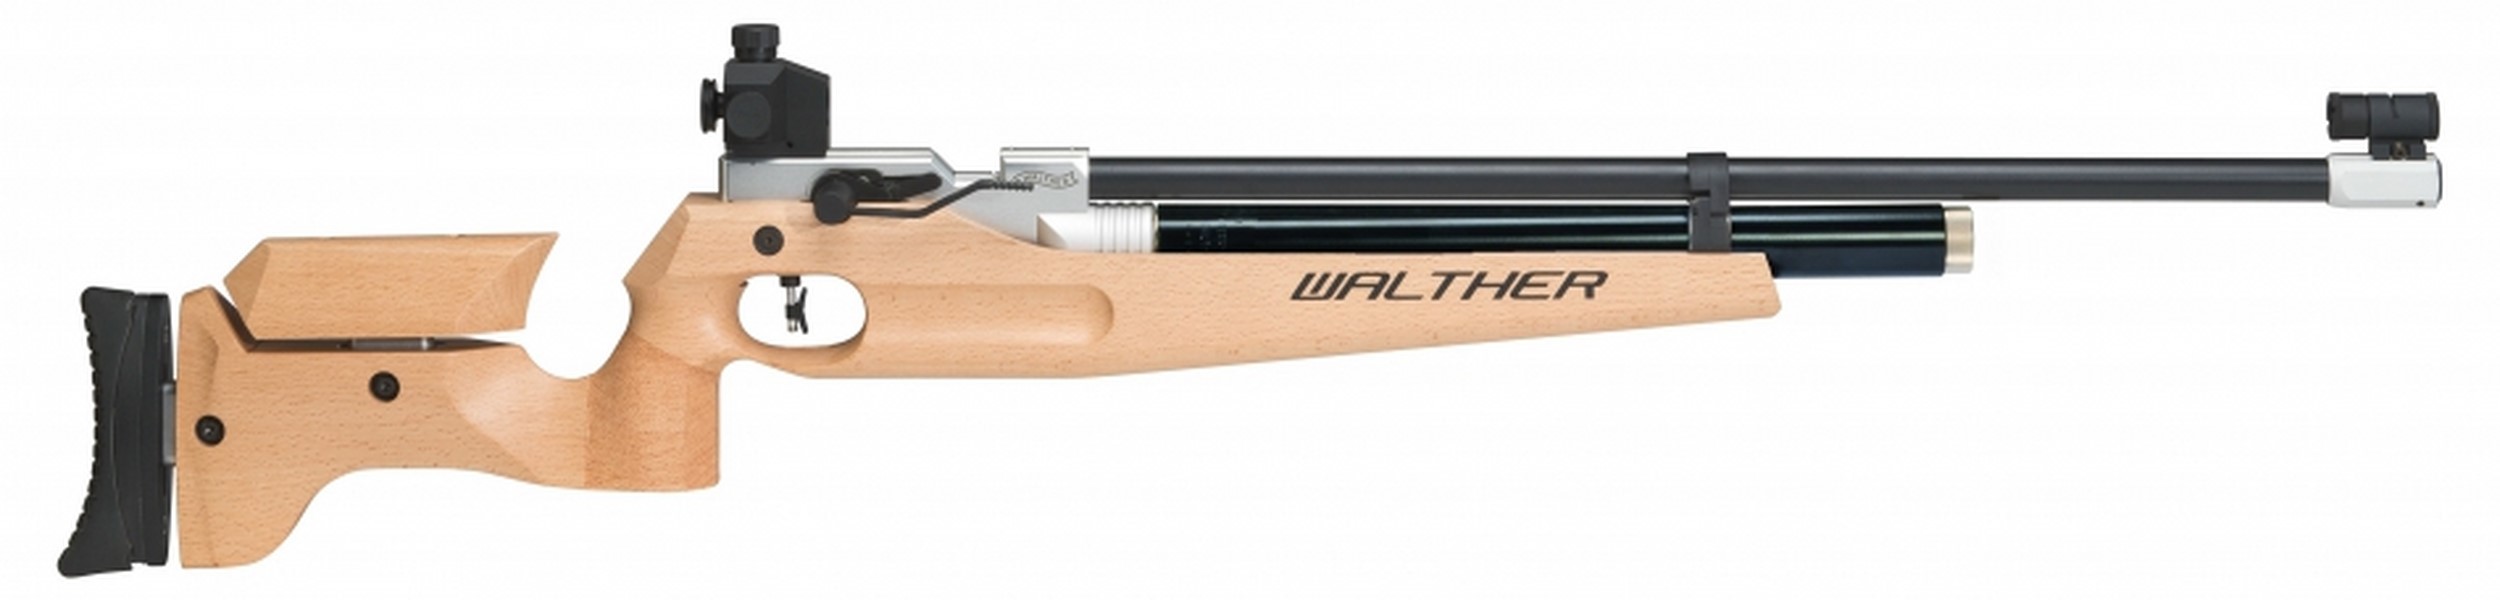 Walther LG 400 uni 2016.jpg